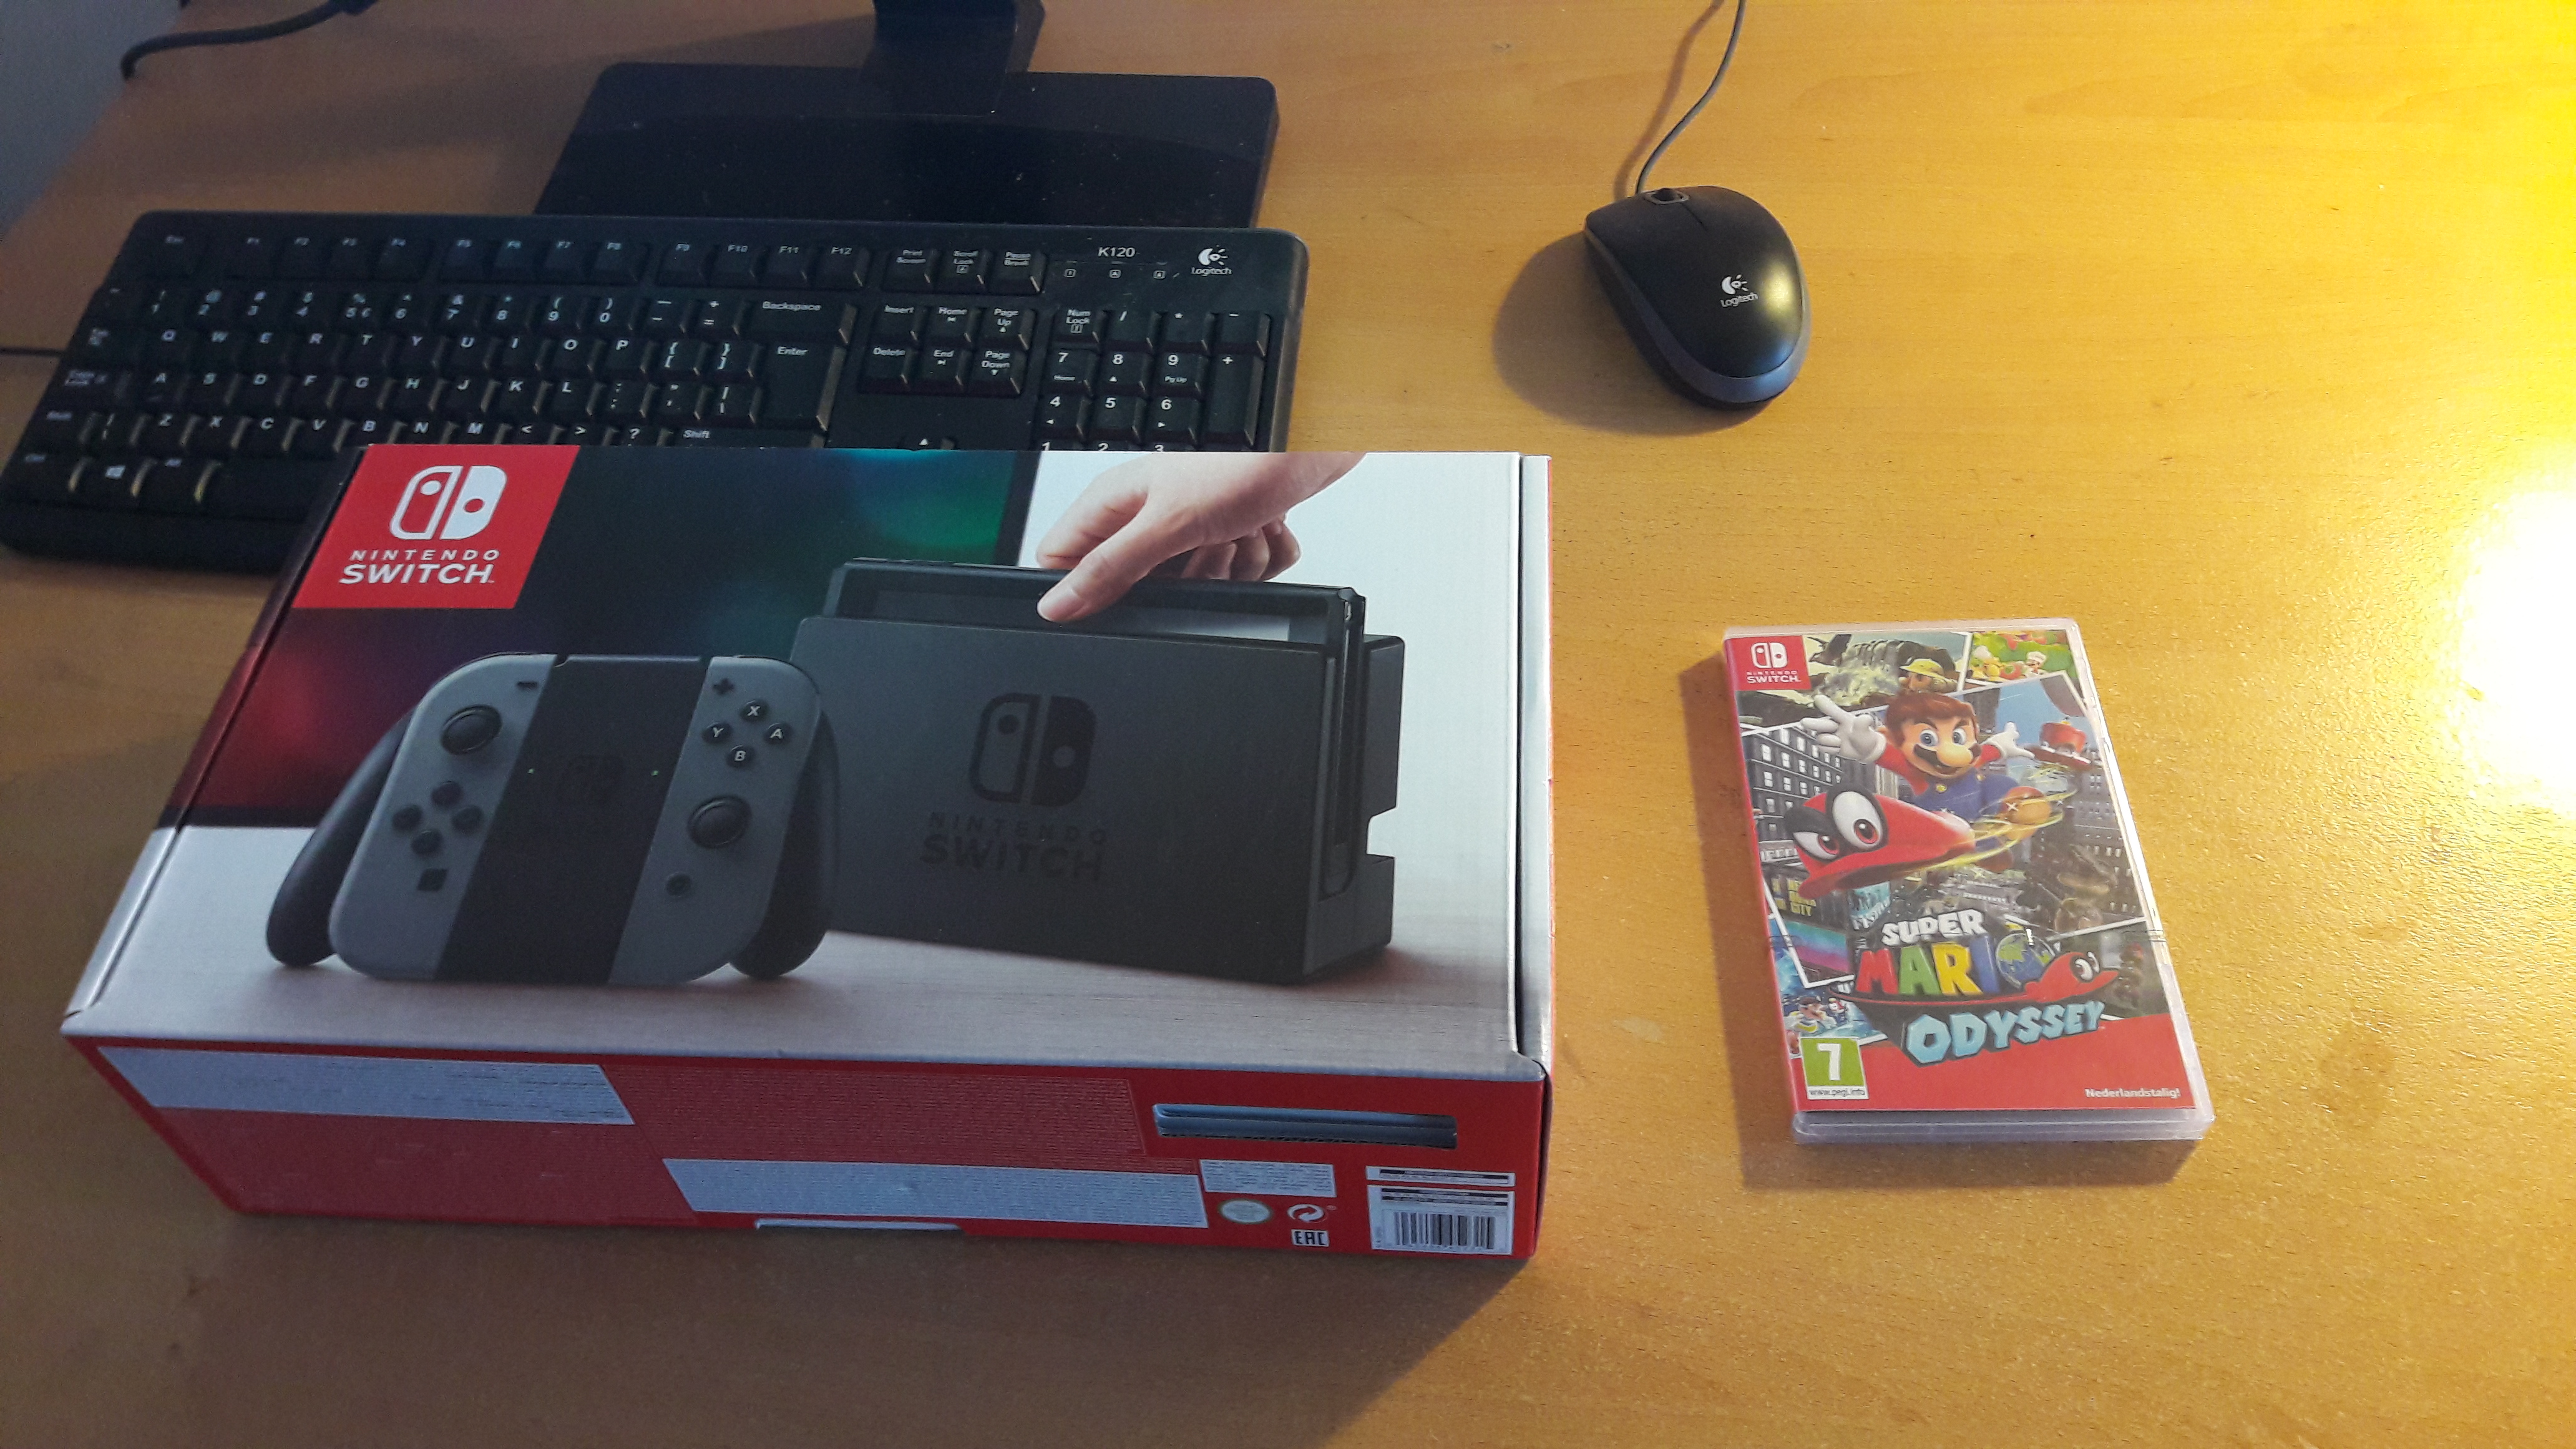 Nintendo Switch box and Super Mario Odyssey